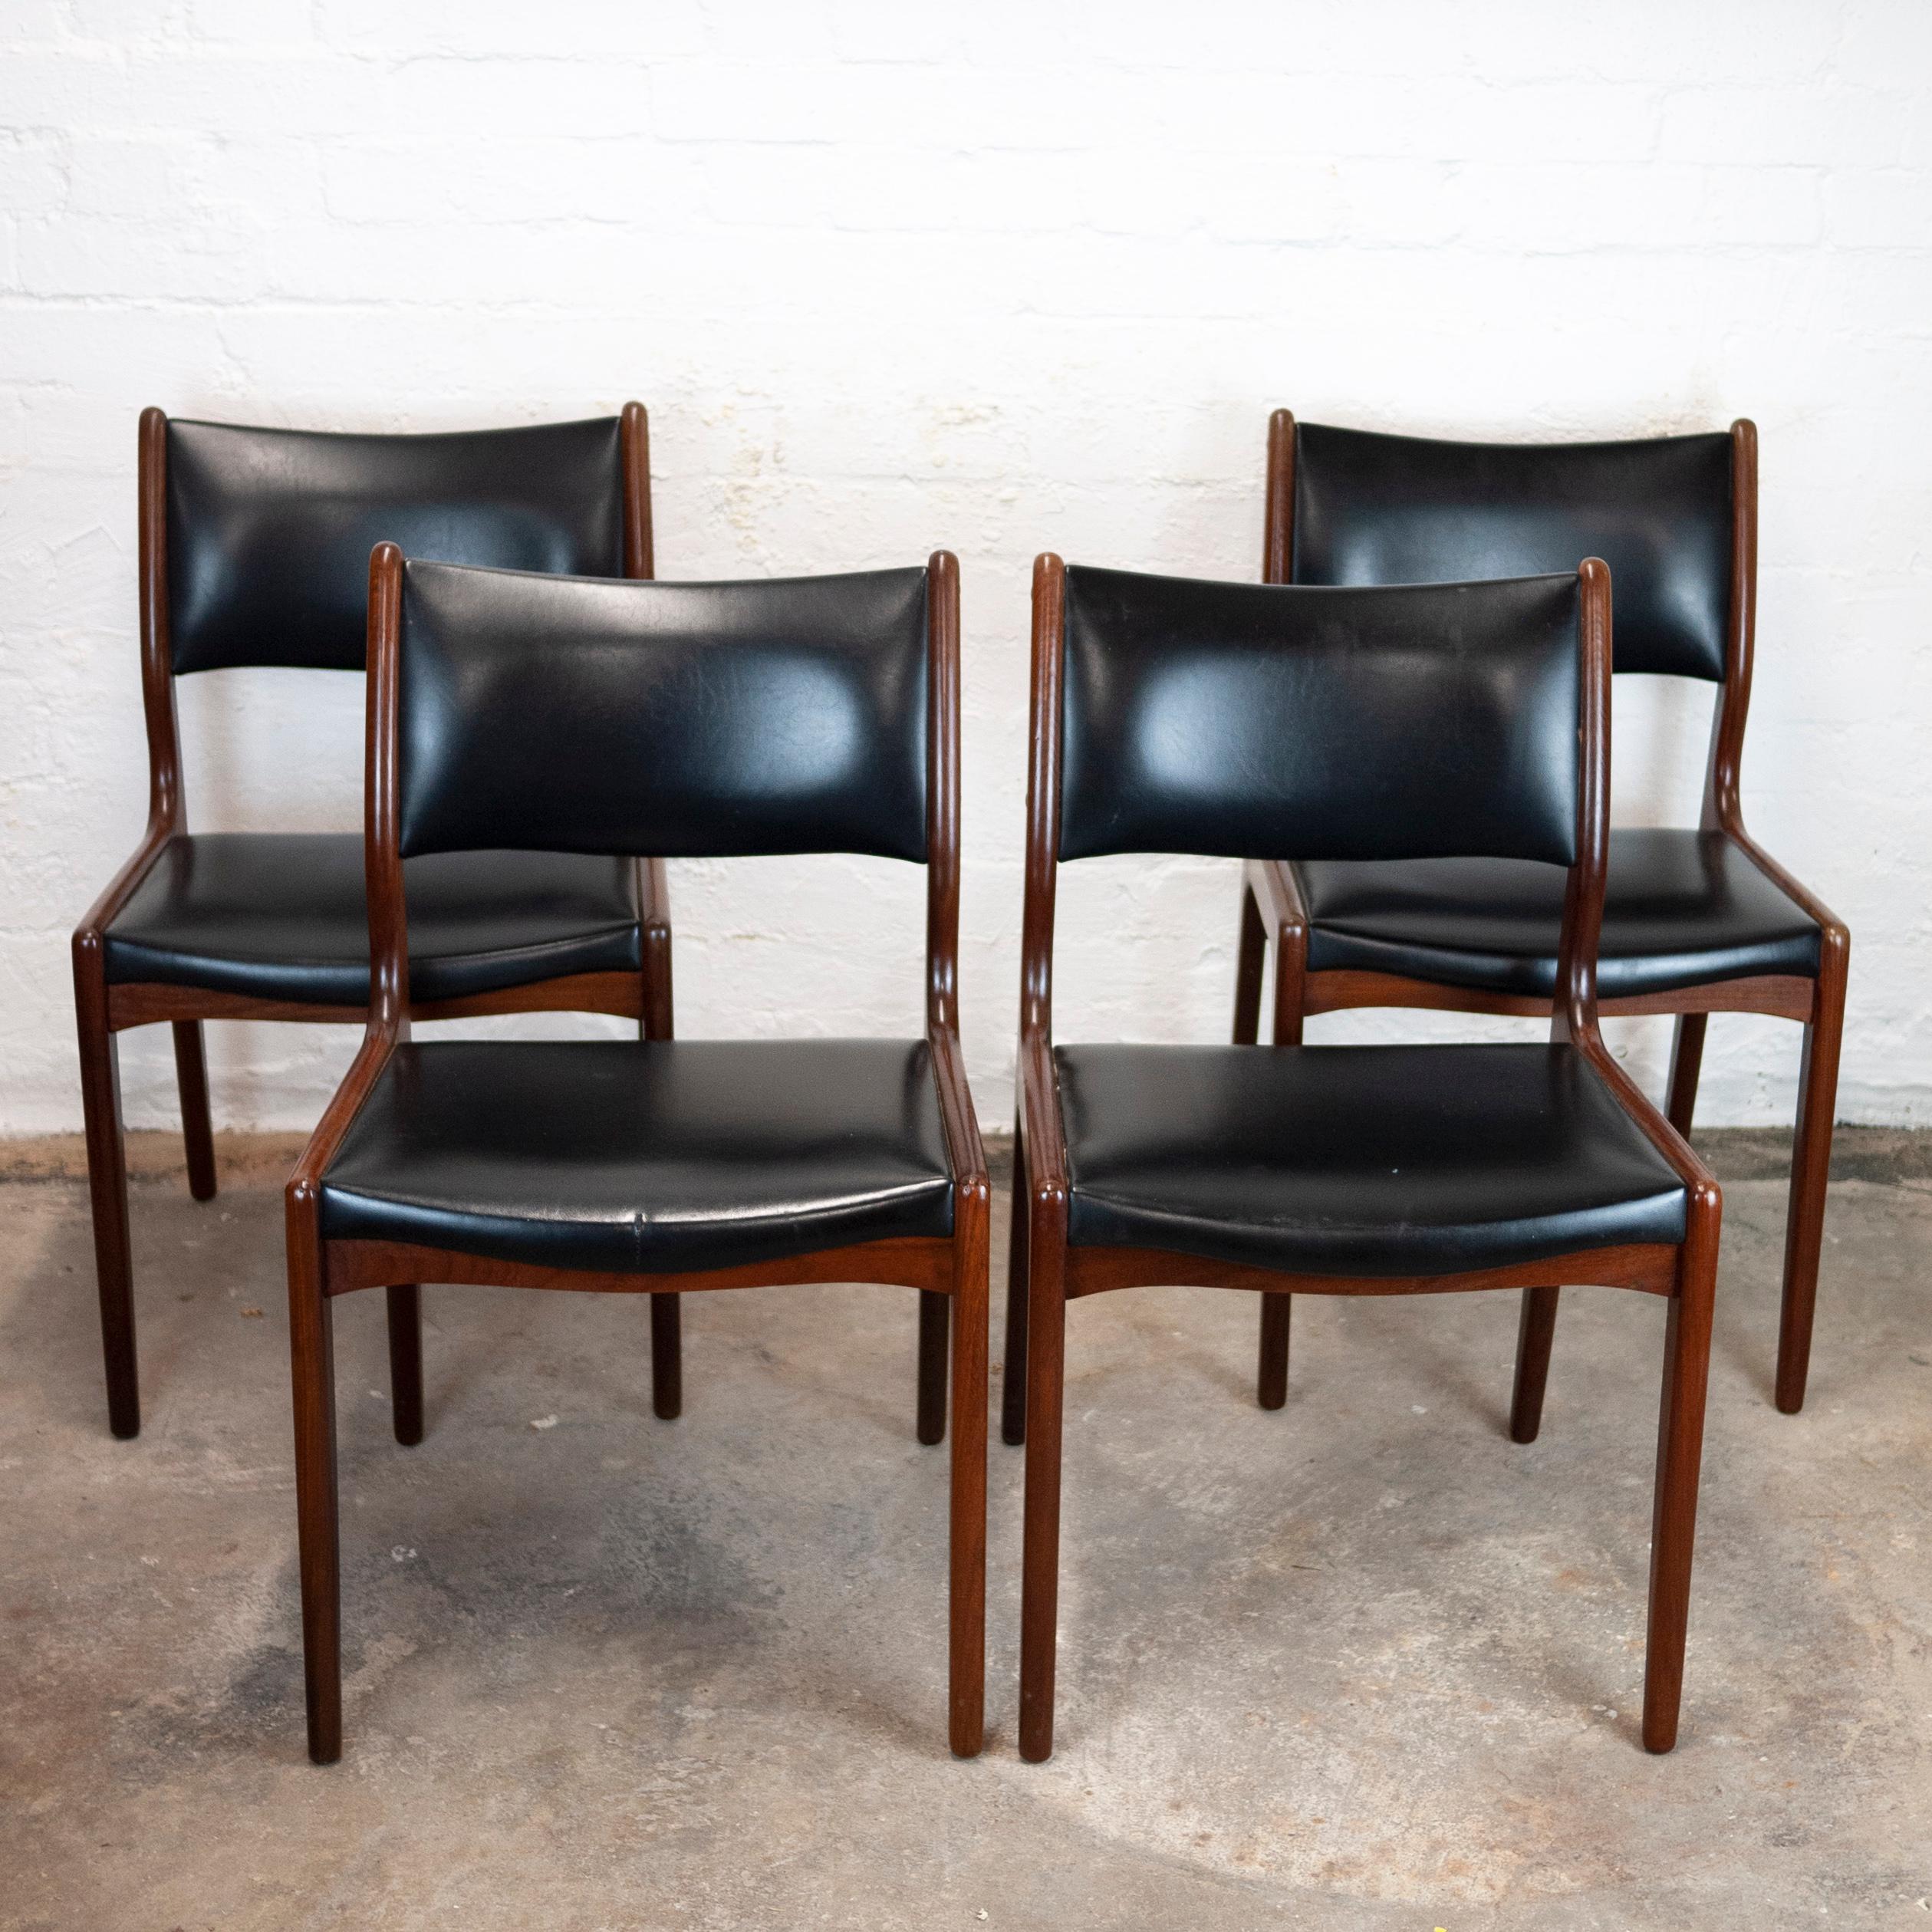 Mid-Century Modern Dining Chairs in Teak and Black Vinyl by Johannes Andersen for Uldum Møbelfabrik